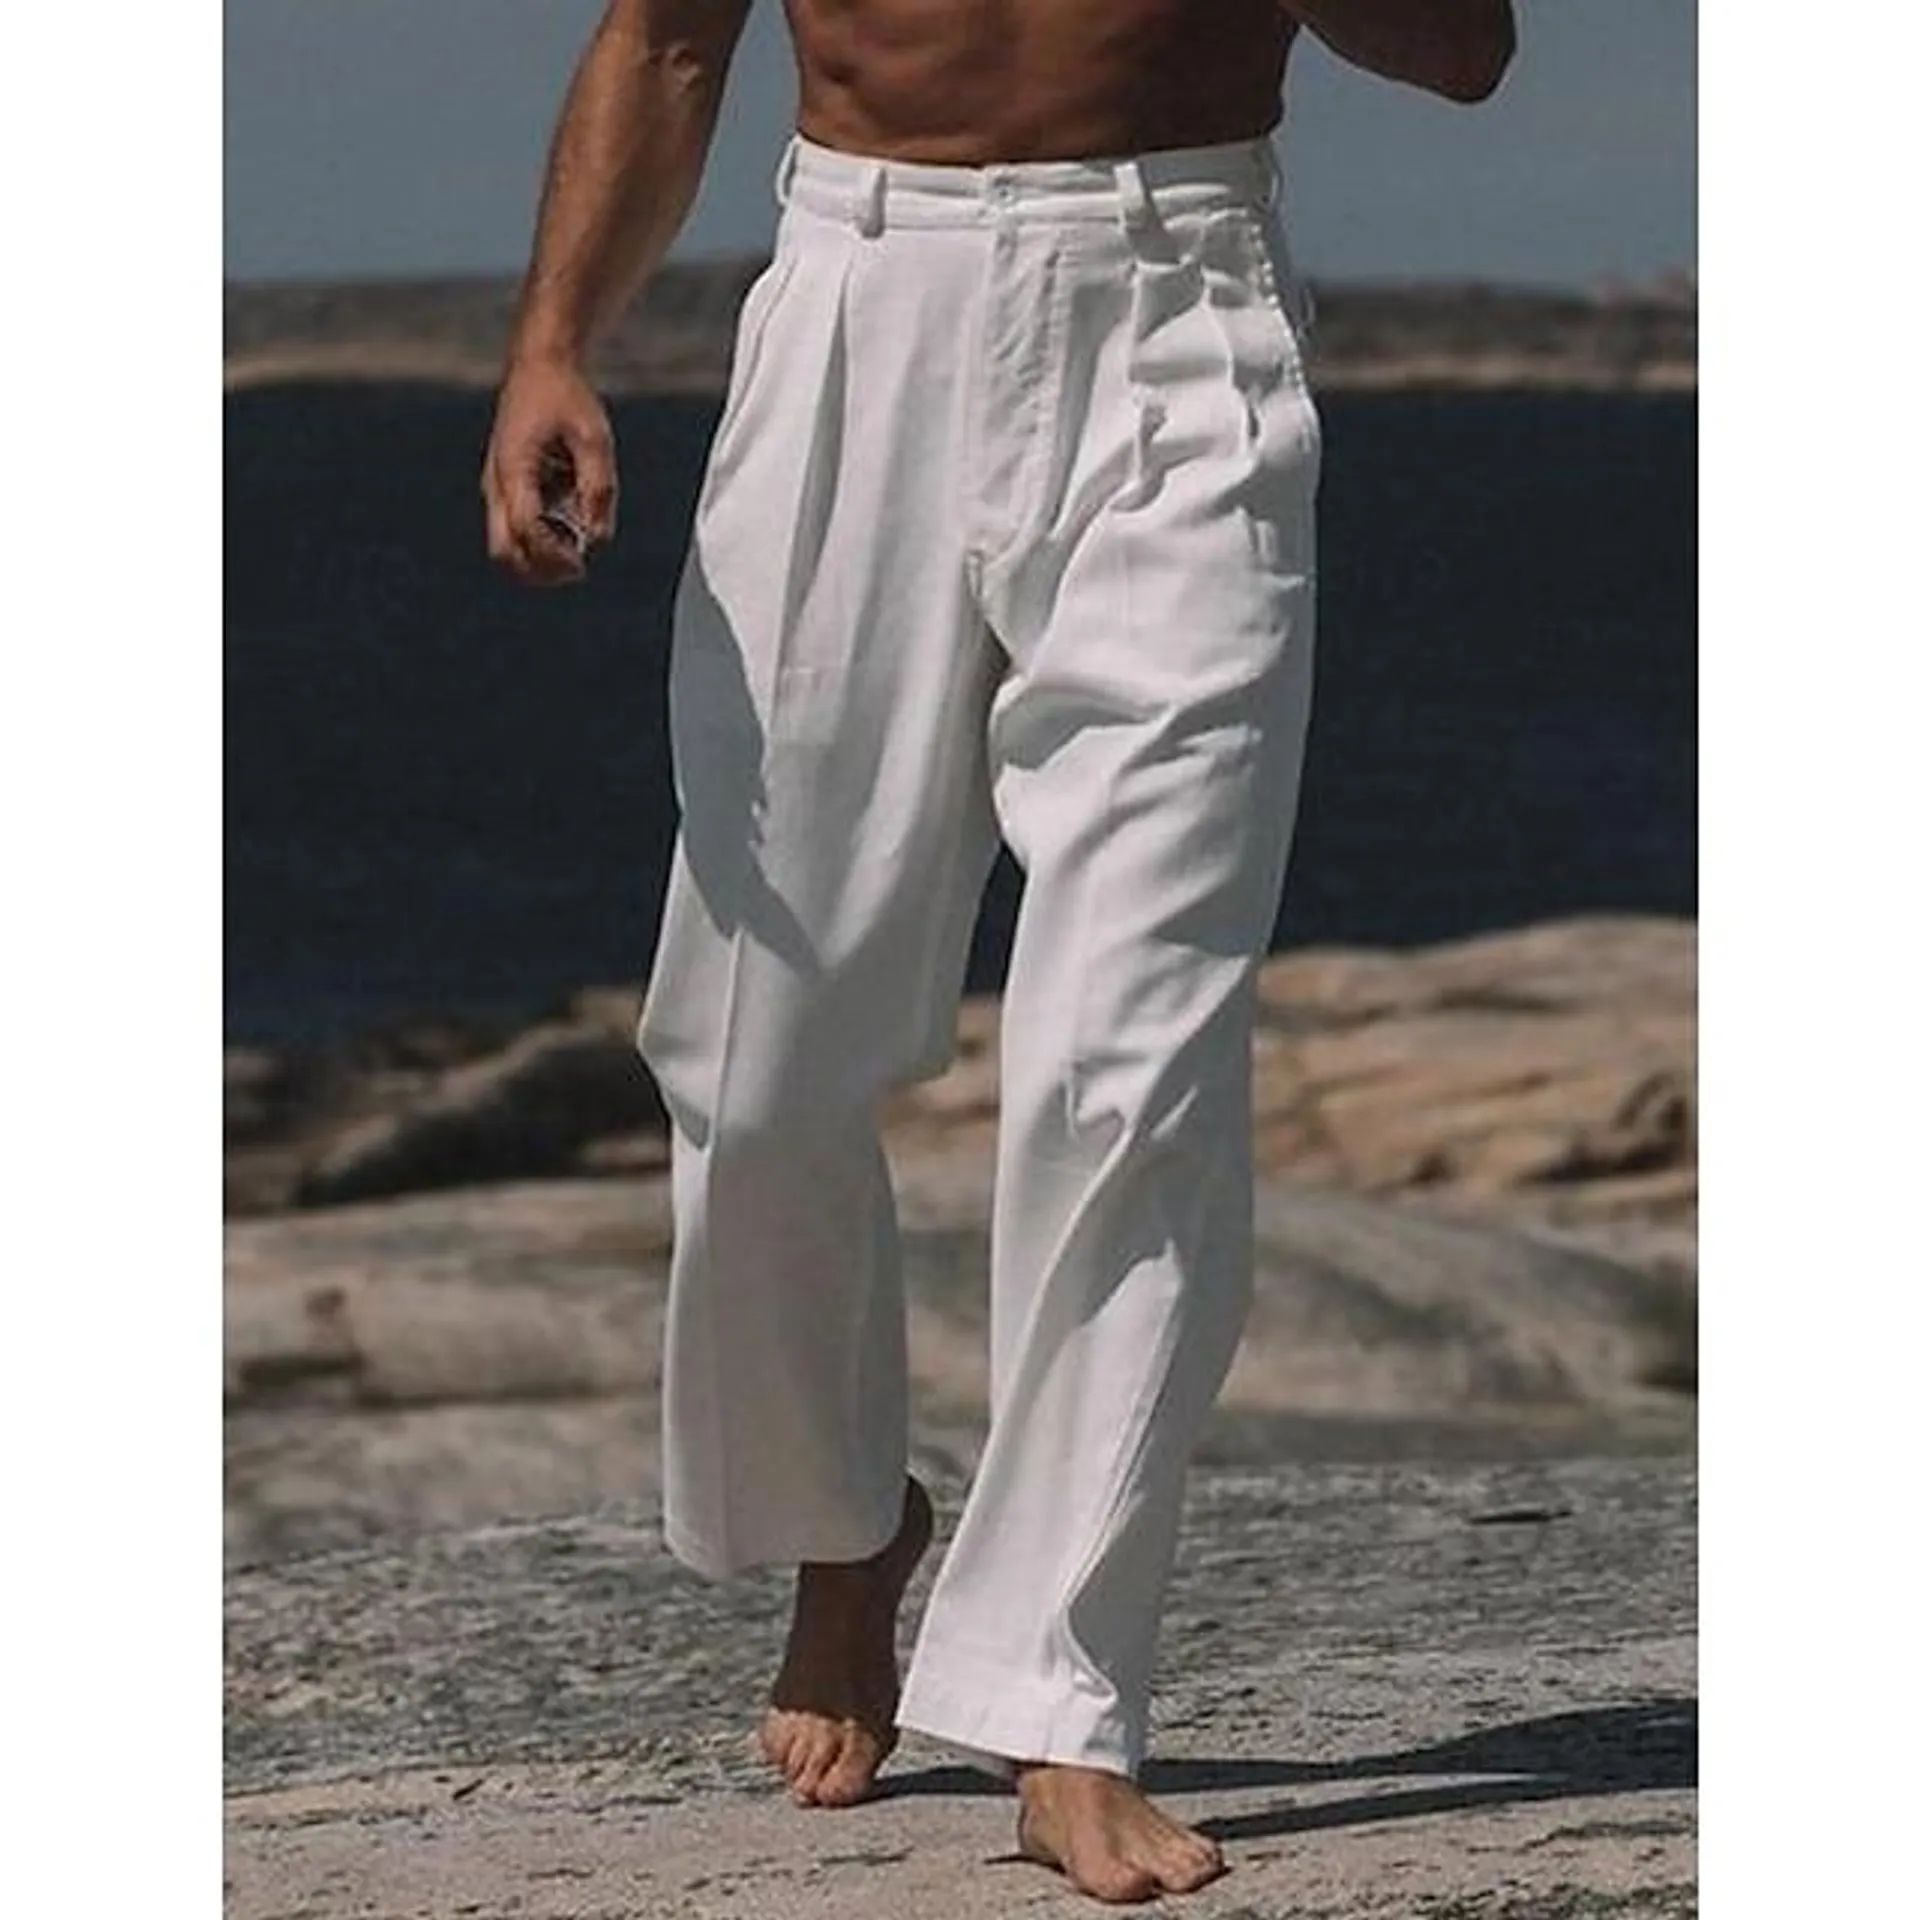 Men's Linen Pants Trousers Summer Pants Button Front Pocket Straight Leg Plain Comfort Breathable Casual Daily Holiday Linen Cotton Blend Fashion Basic White Beige